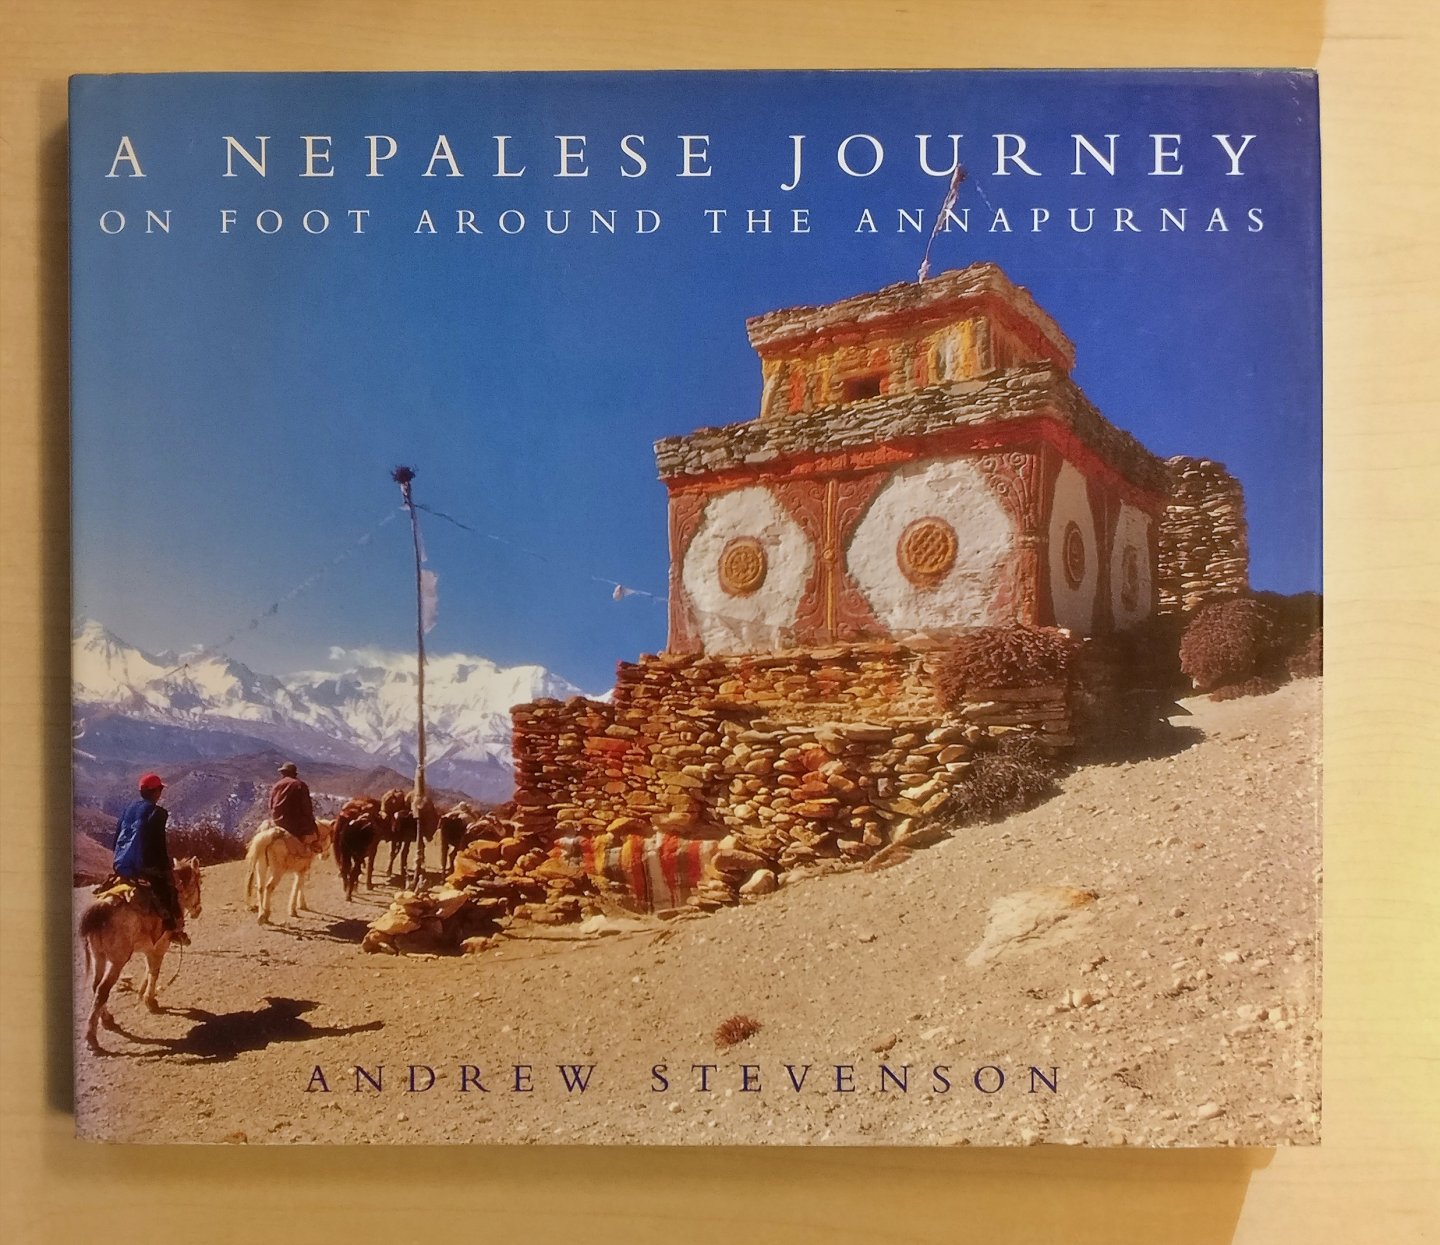 Andrew Stephenson - A Nepalese Journey - On foot around the Annapurnas